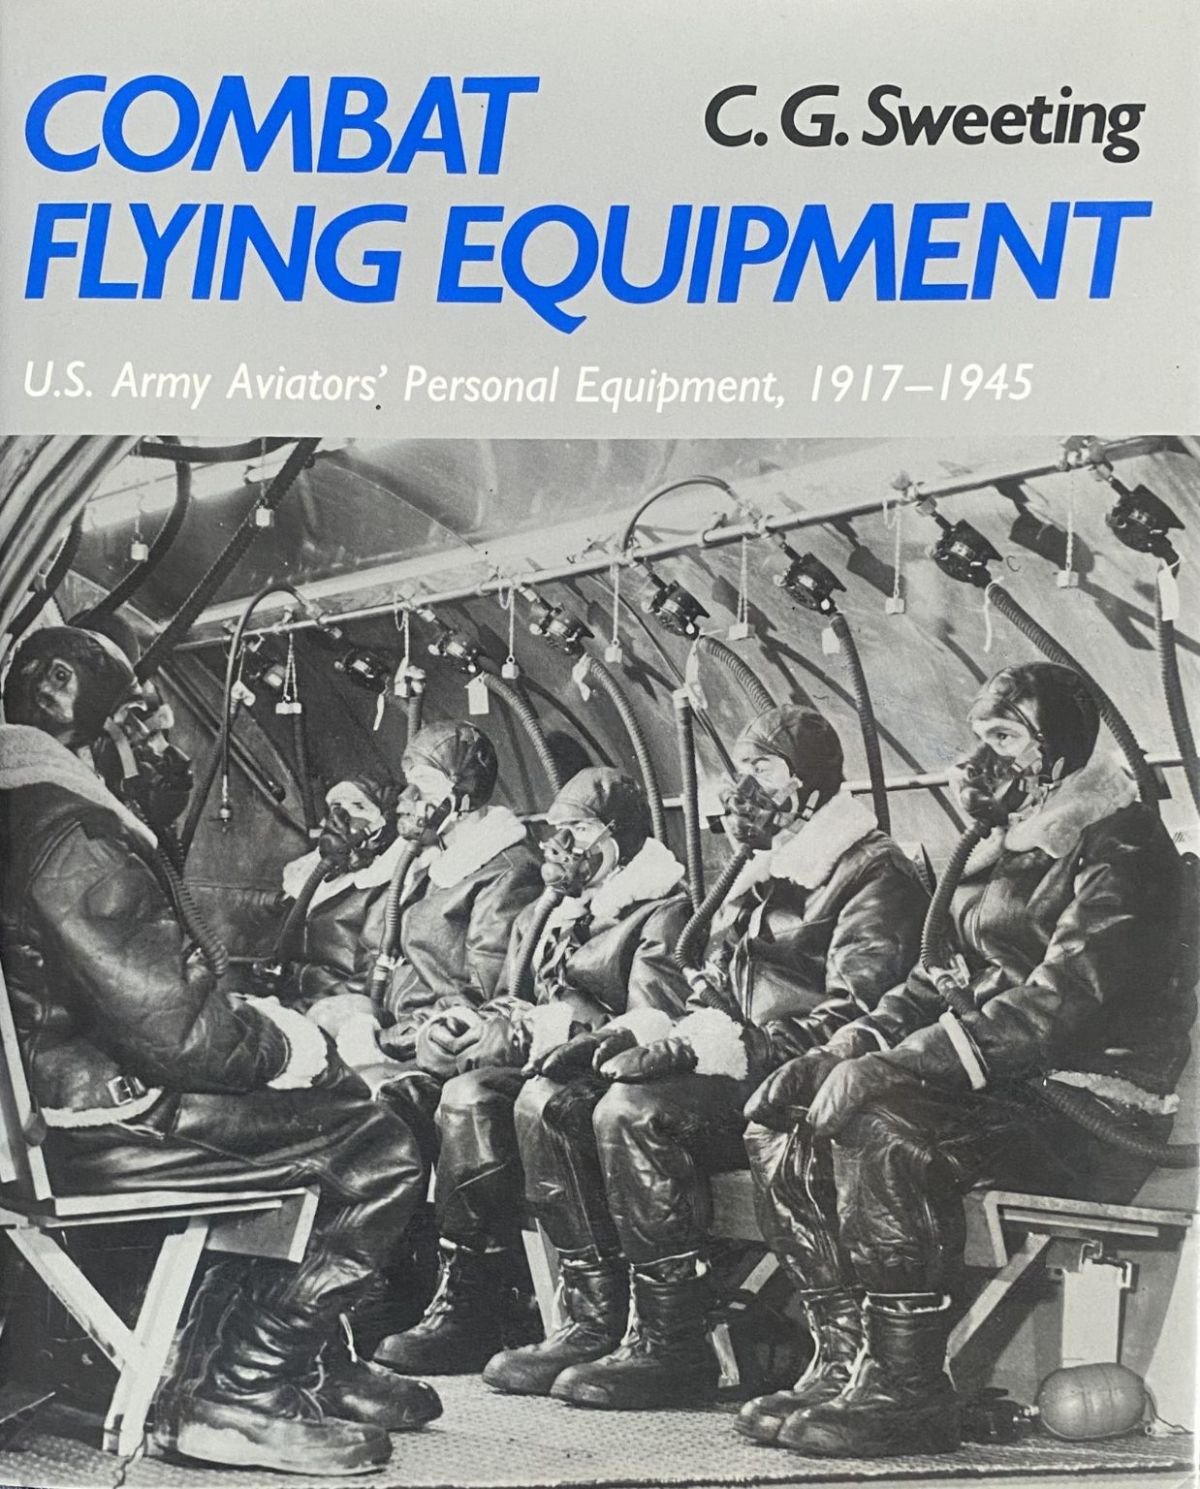 COMBAT FLYING EQUIPMENT: U.S. Army Aviators' Personal Equipment 1917-1945